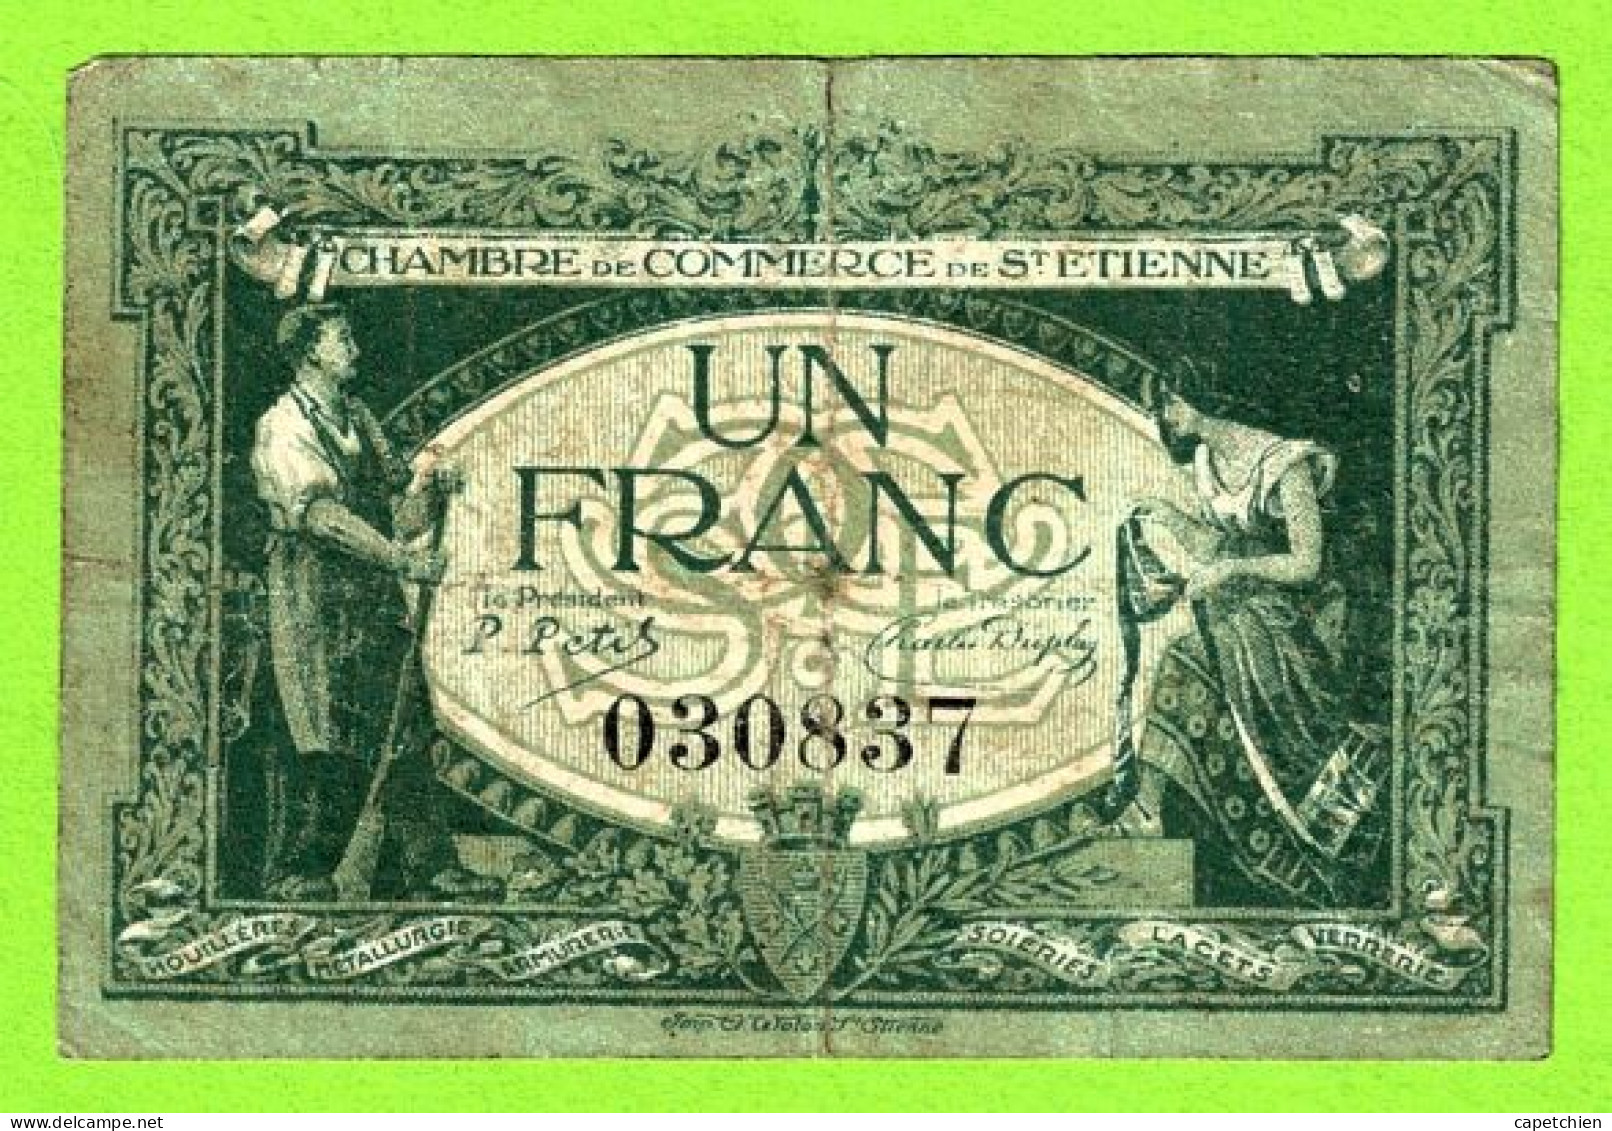 FRANCE / CHAMBRE De COMMERCE De SAINT ETIENNE / 1 FRANC / 12 JANVIER 1921 / N°030837 SERIE - Handelskammer